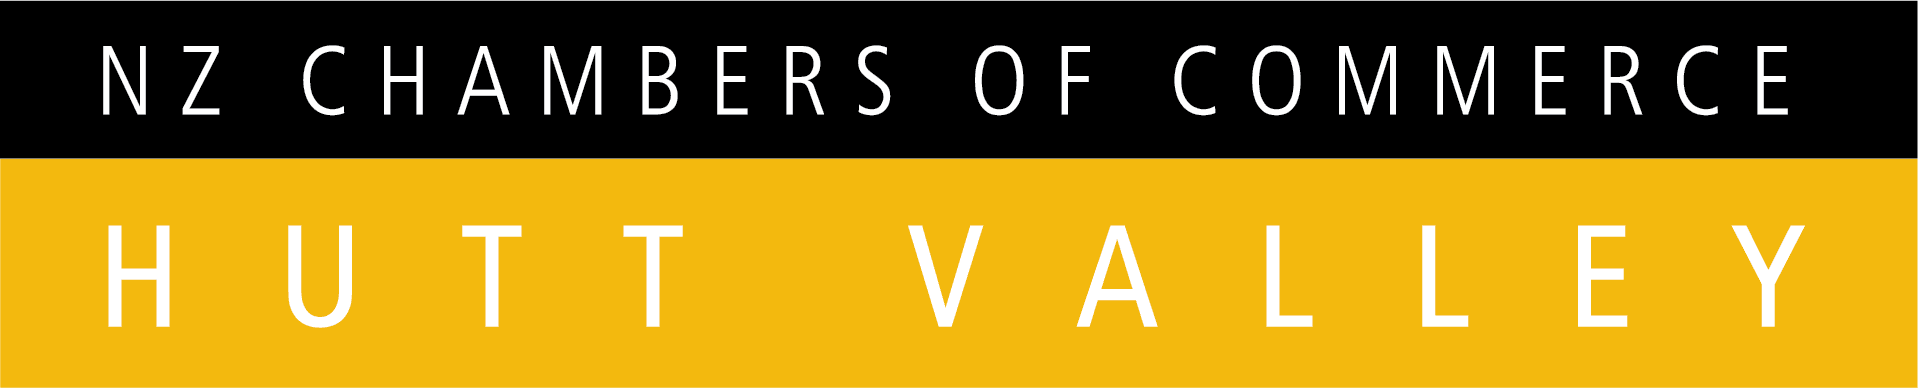 Hutt Valley Chamber of Commerce Logo